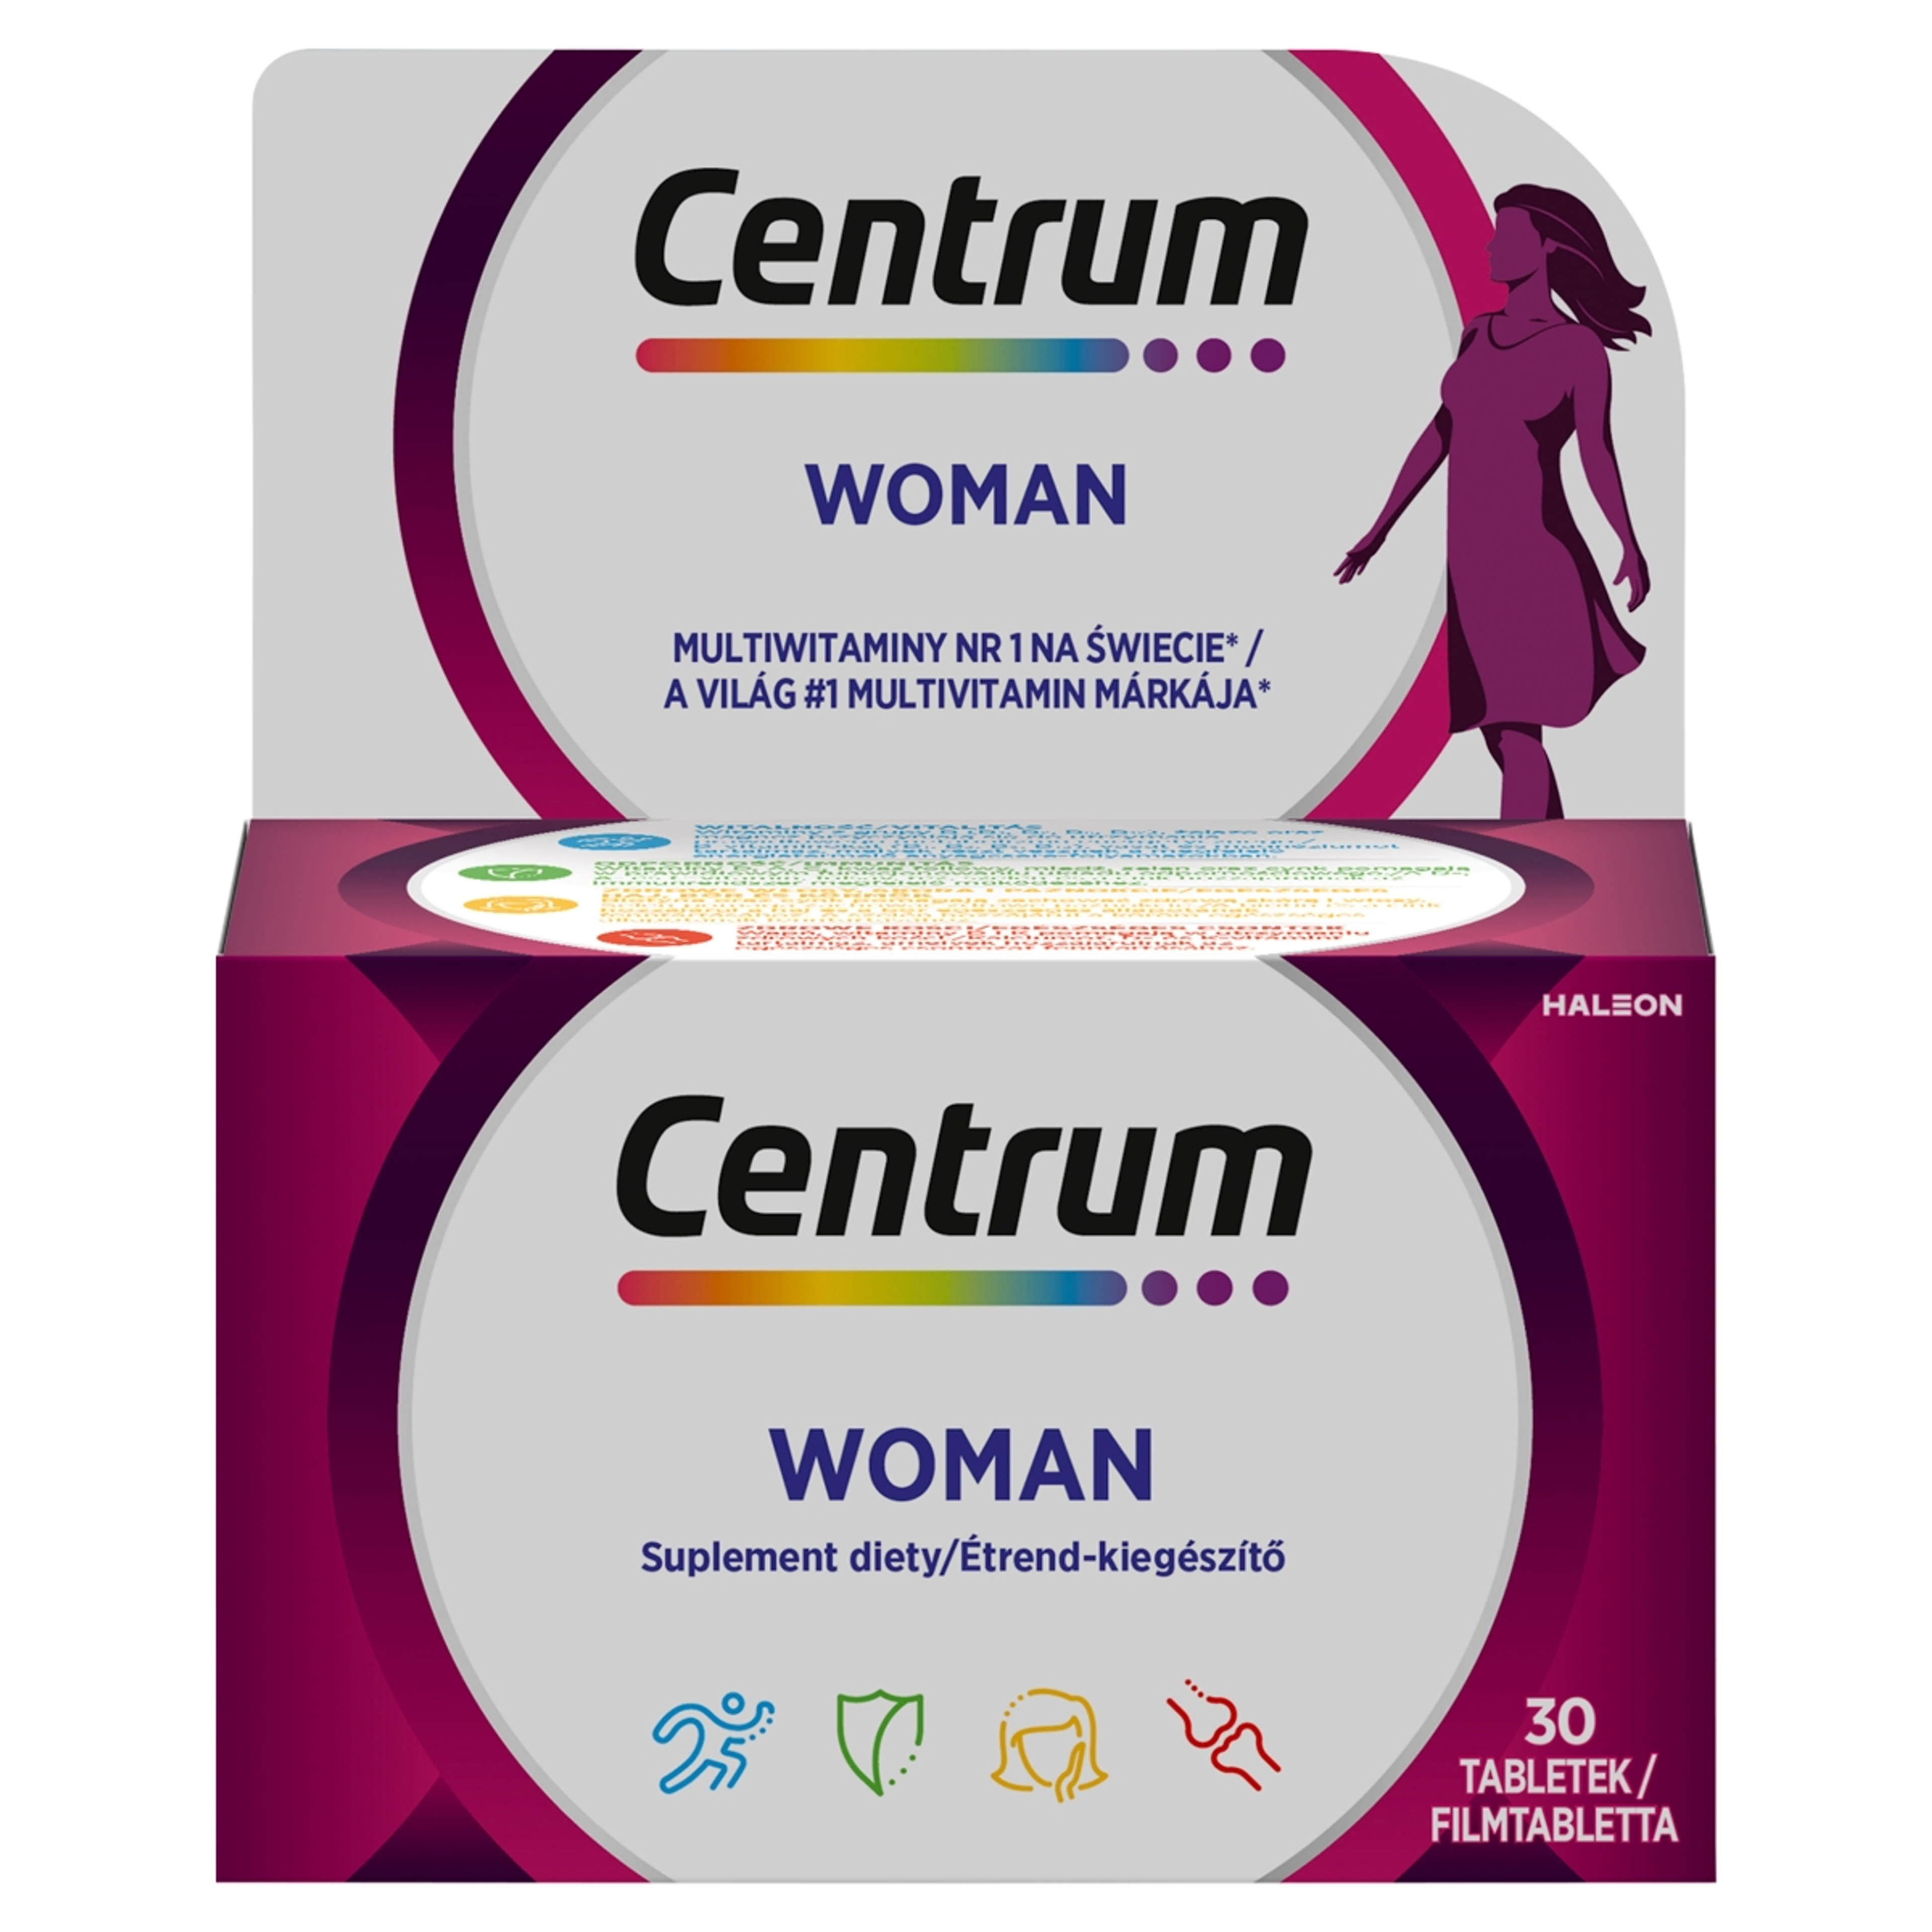 Centrum Nőknek A-tól Z-ig multivitamin tabletta - 30 db